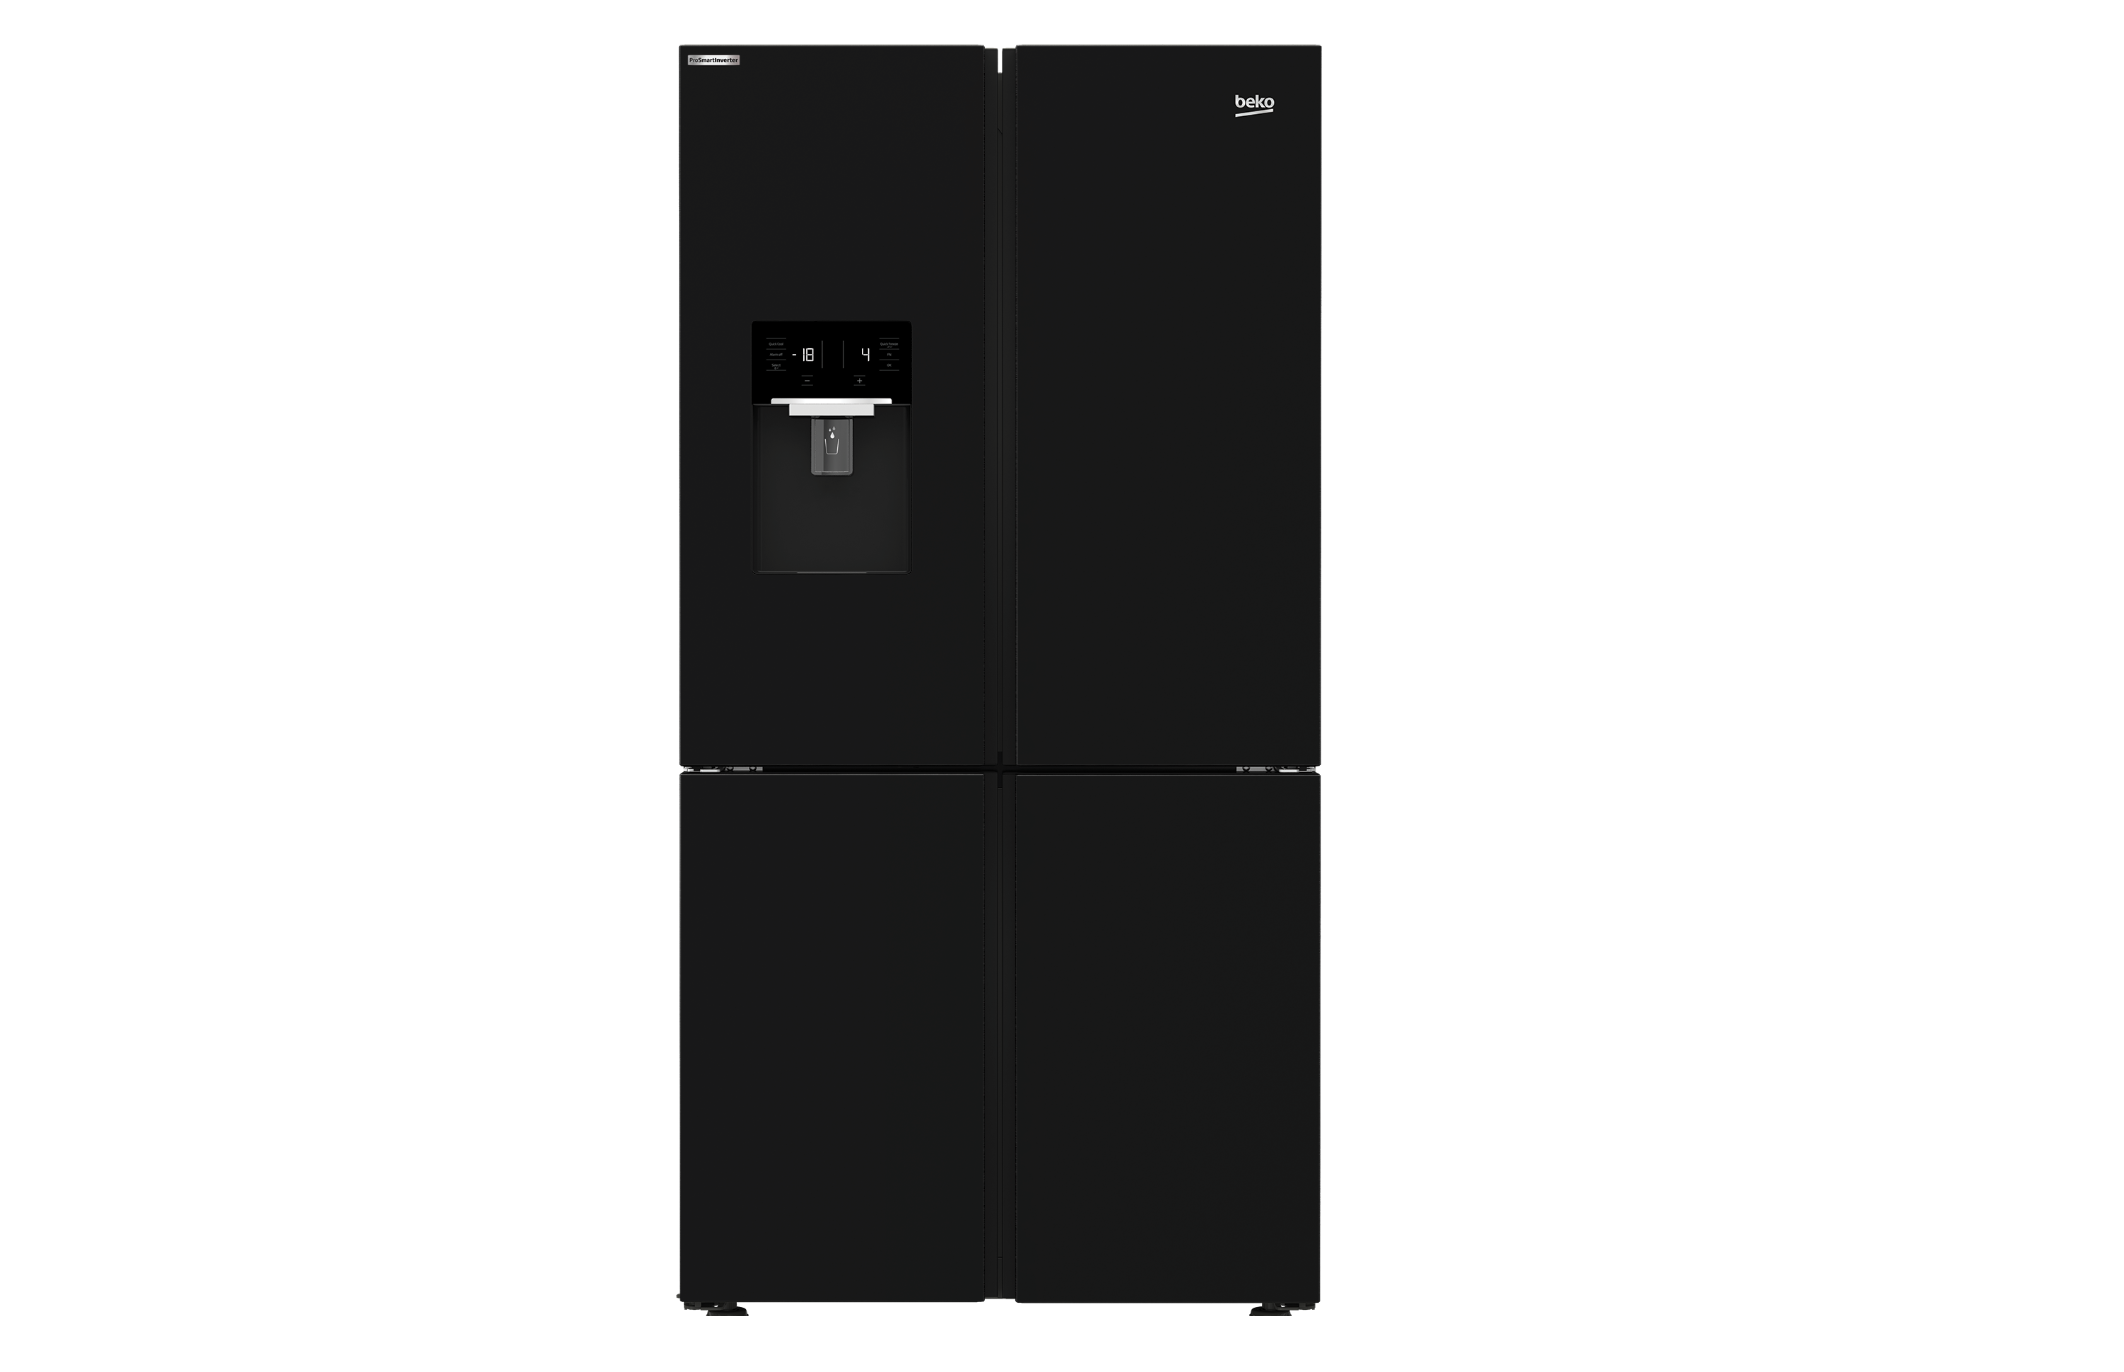 Réfrigérateur américain SAMSUNG RS68A8820B1